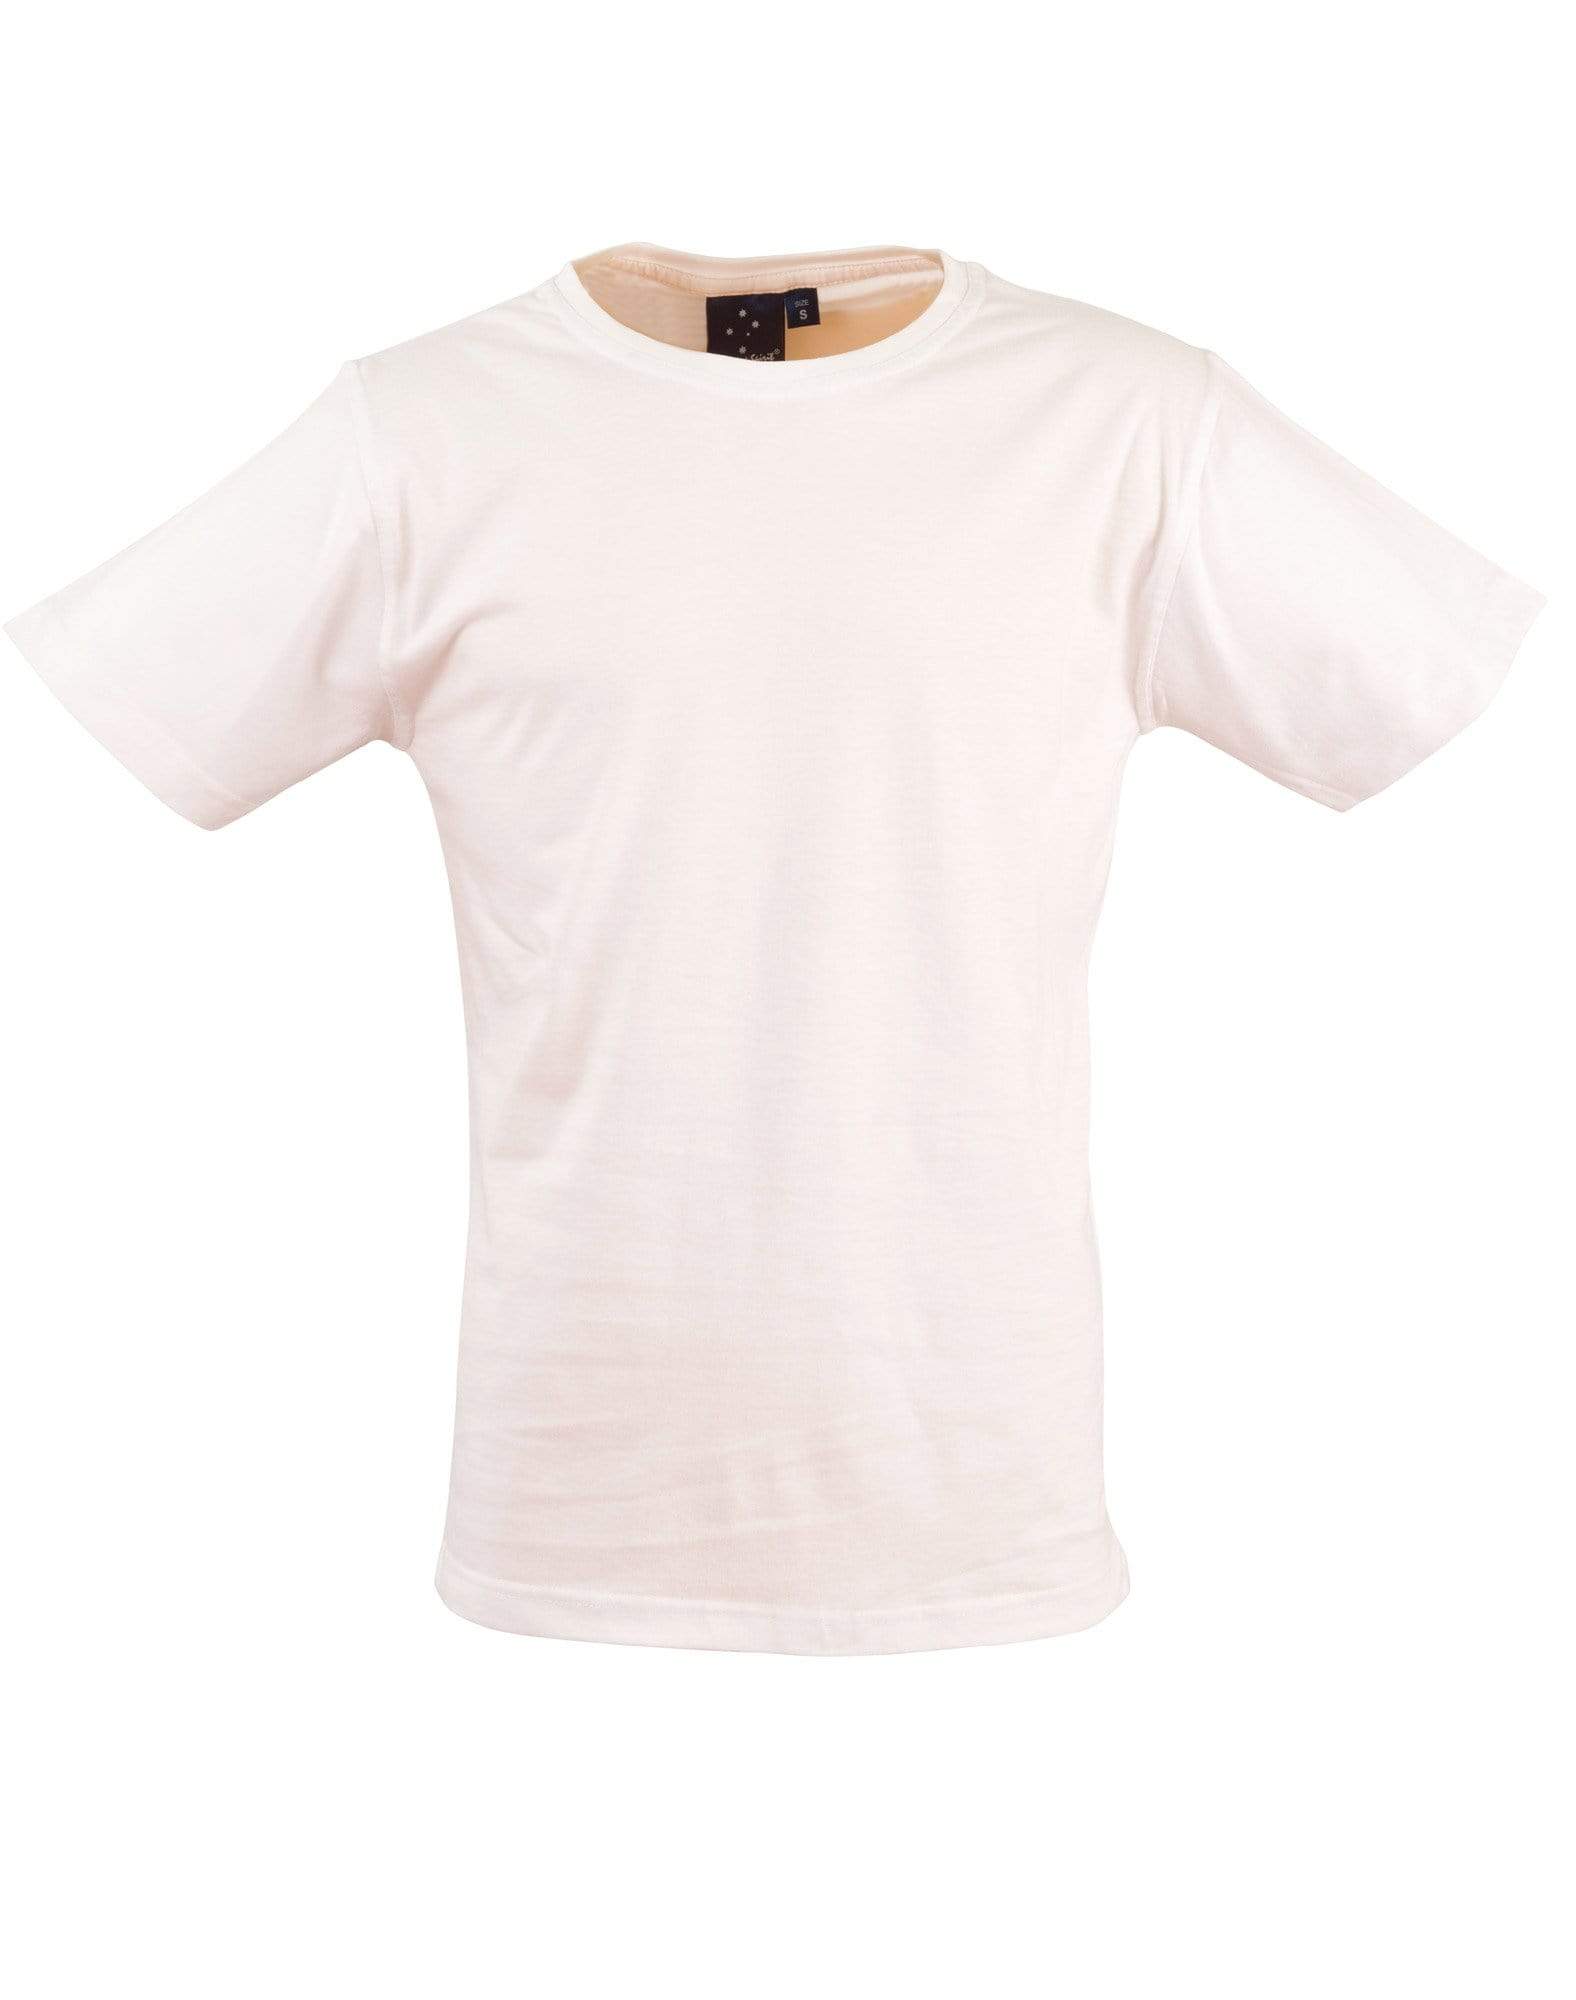 Budget Unisex Tee Shirt TS20 Casual Wear Winning Spirit White XS 